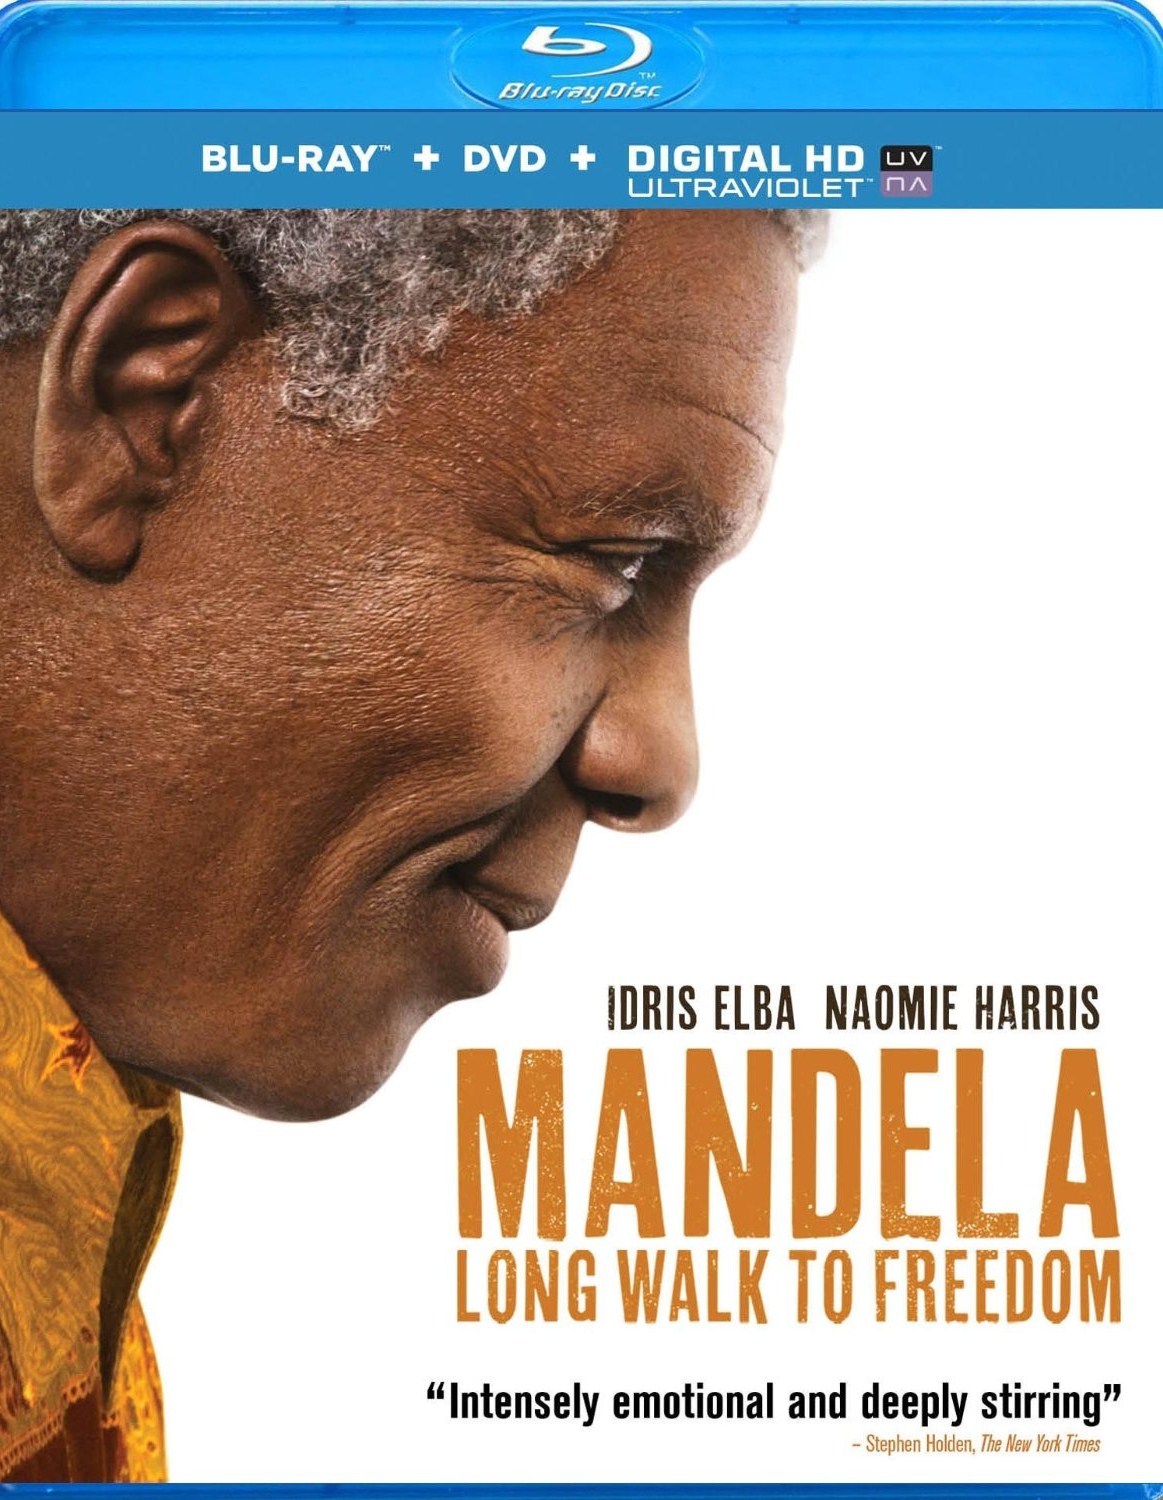 Mandela Long Walk to Freedom Blu-ray Review